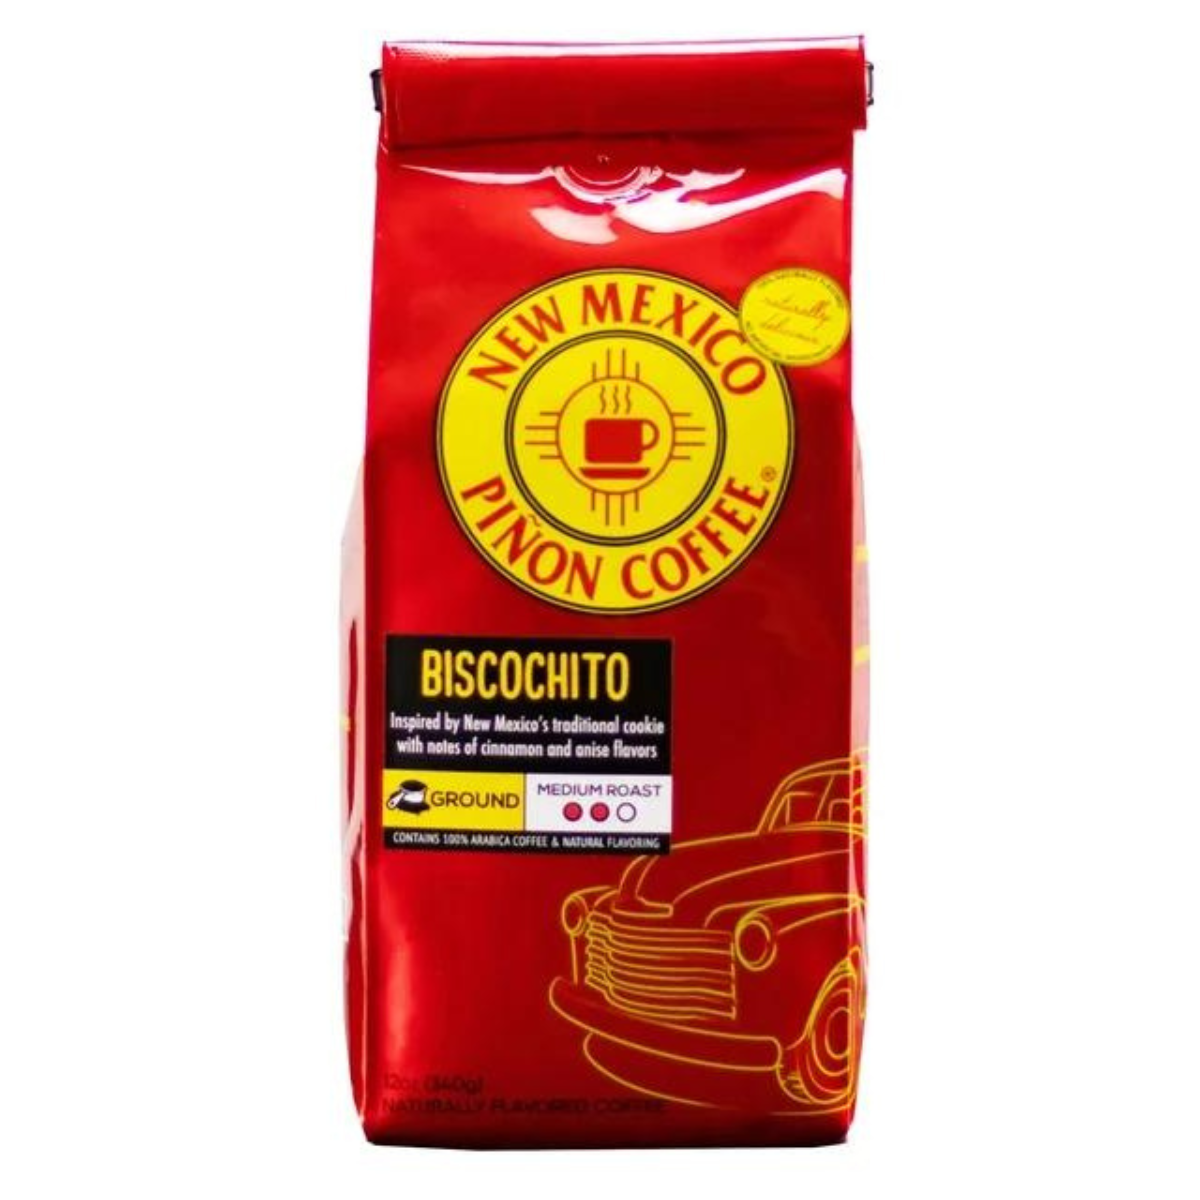 New Mexico Biscochito Ground Coffee 12 oz